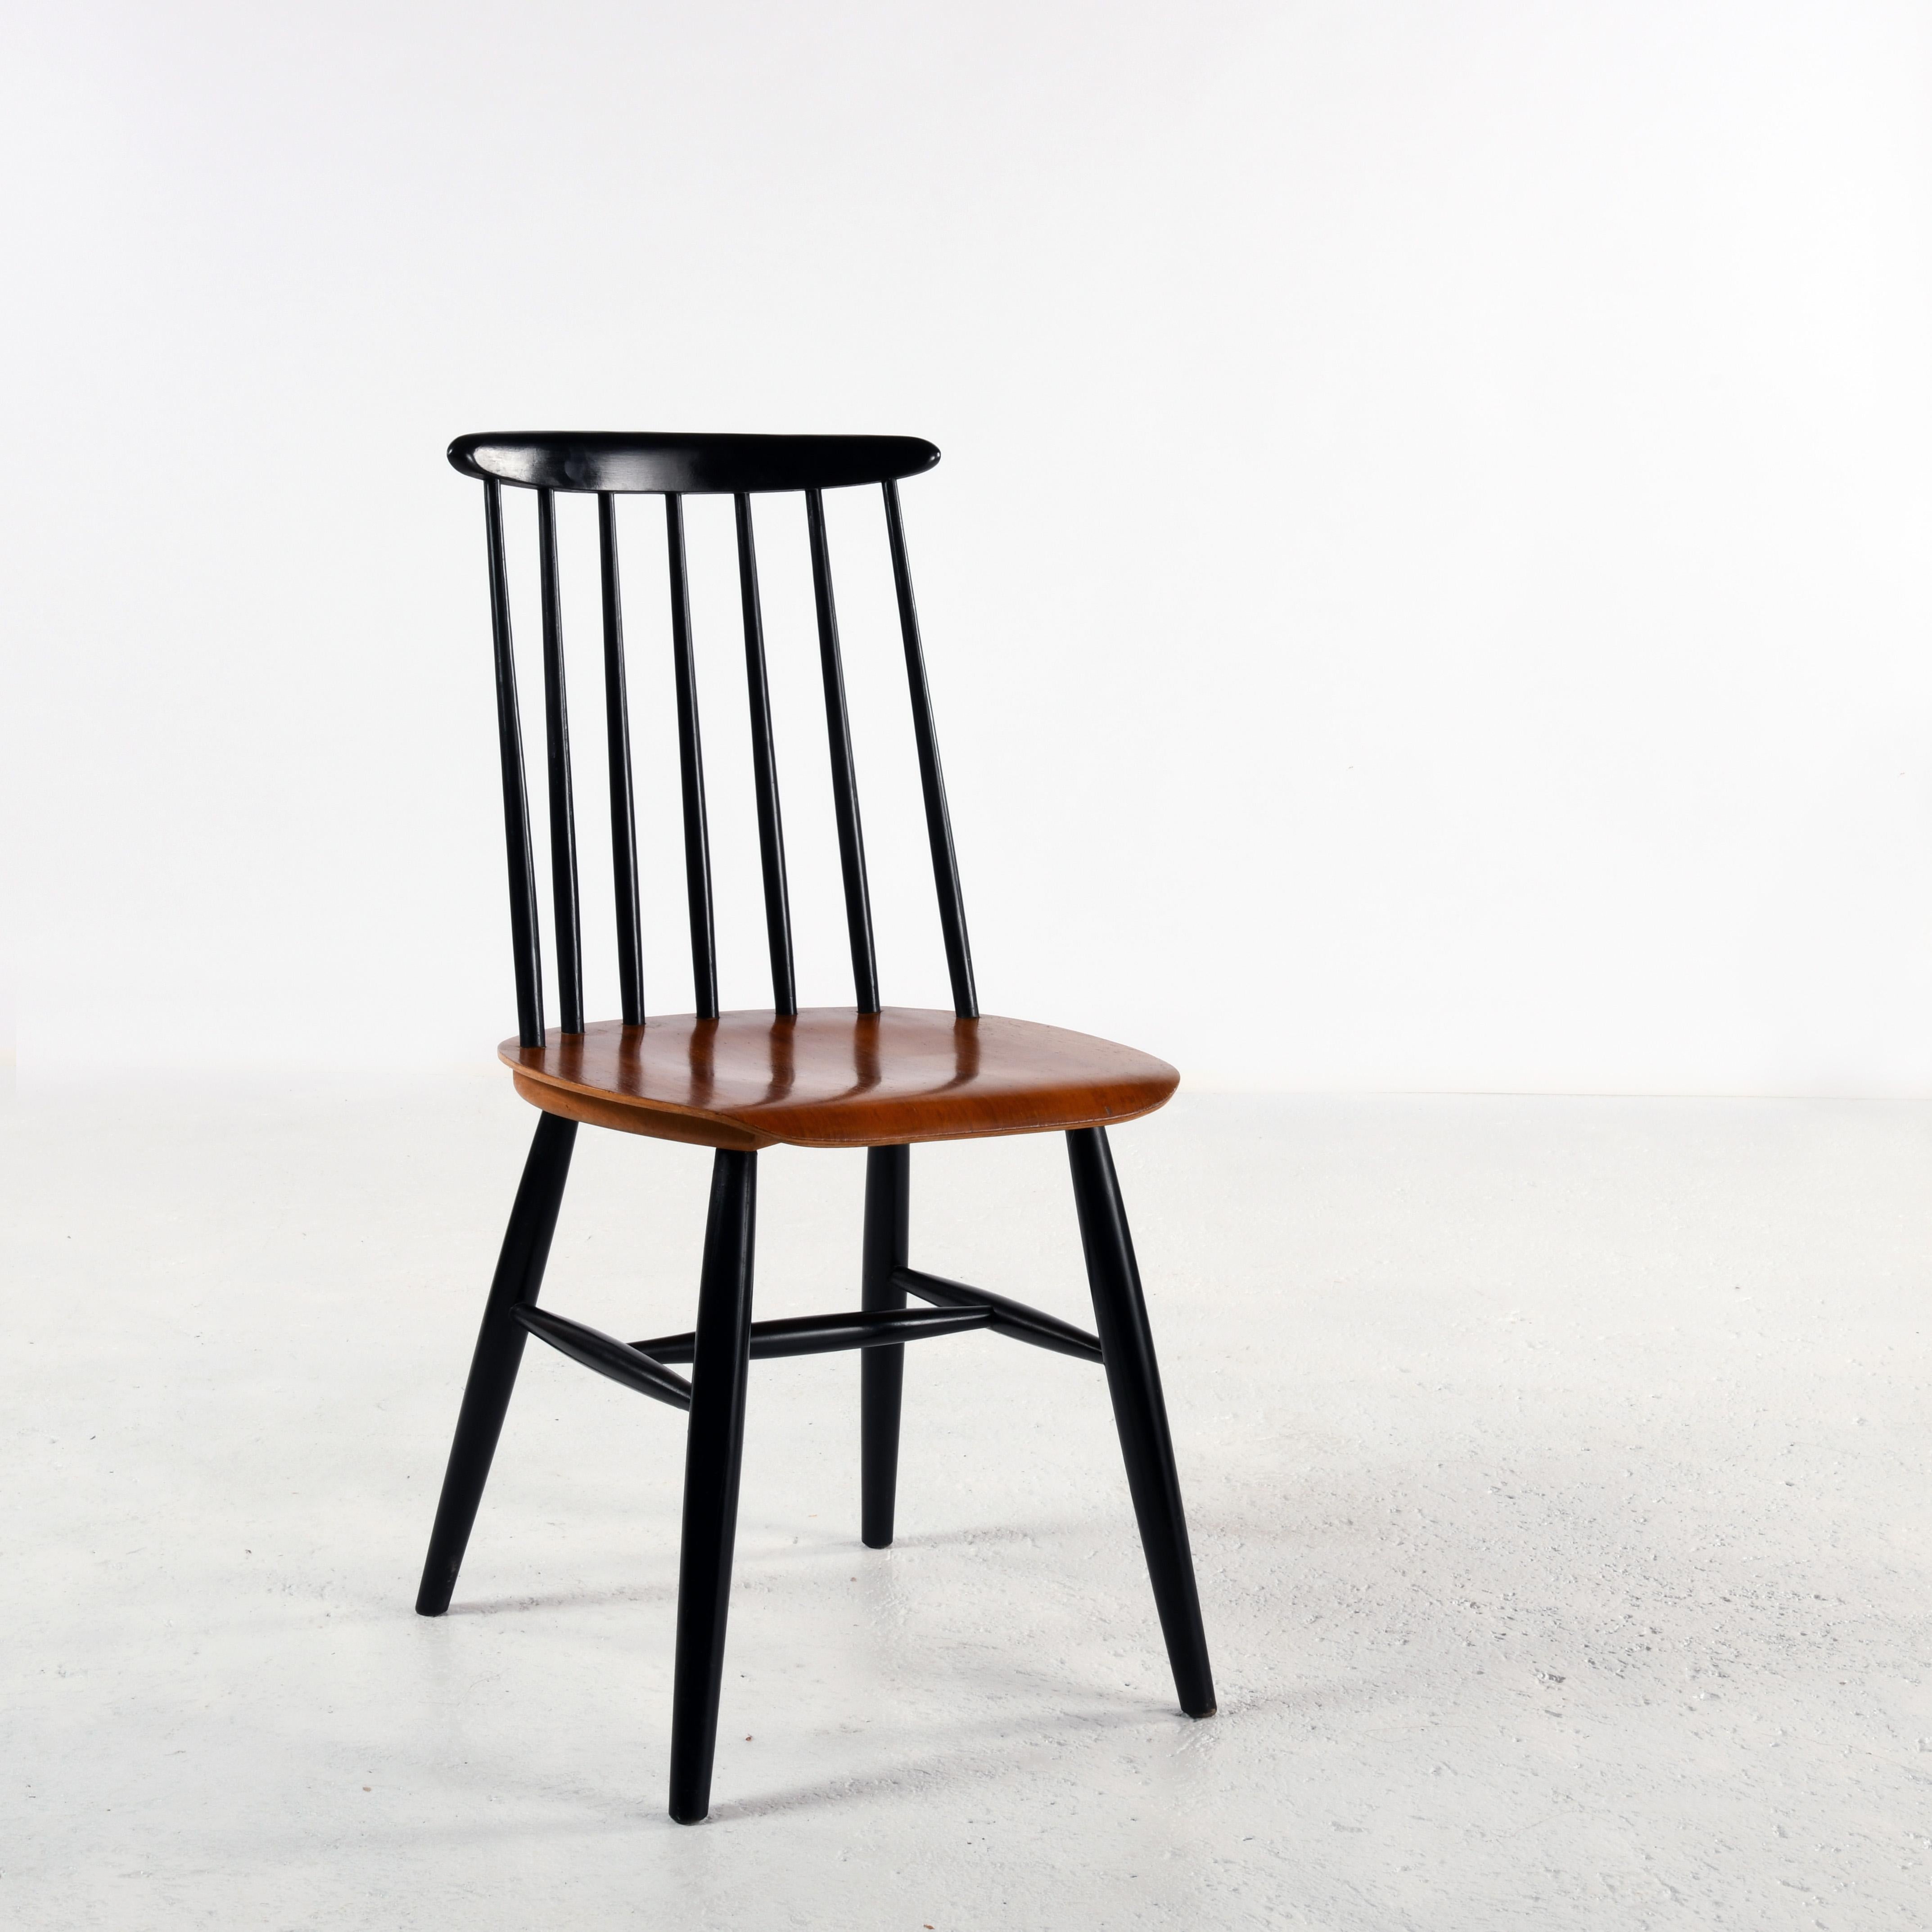 Wood 4 Fanett chair designed by Ilmari Tapiovaara